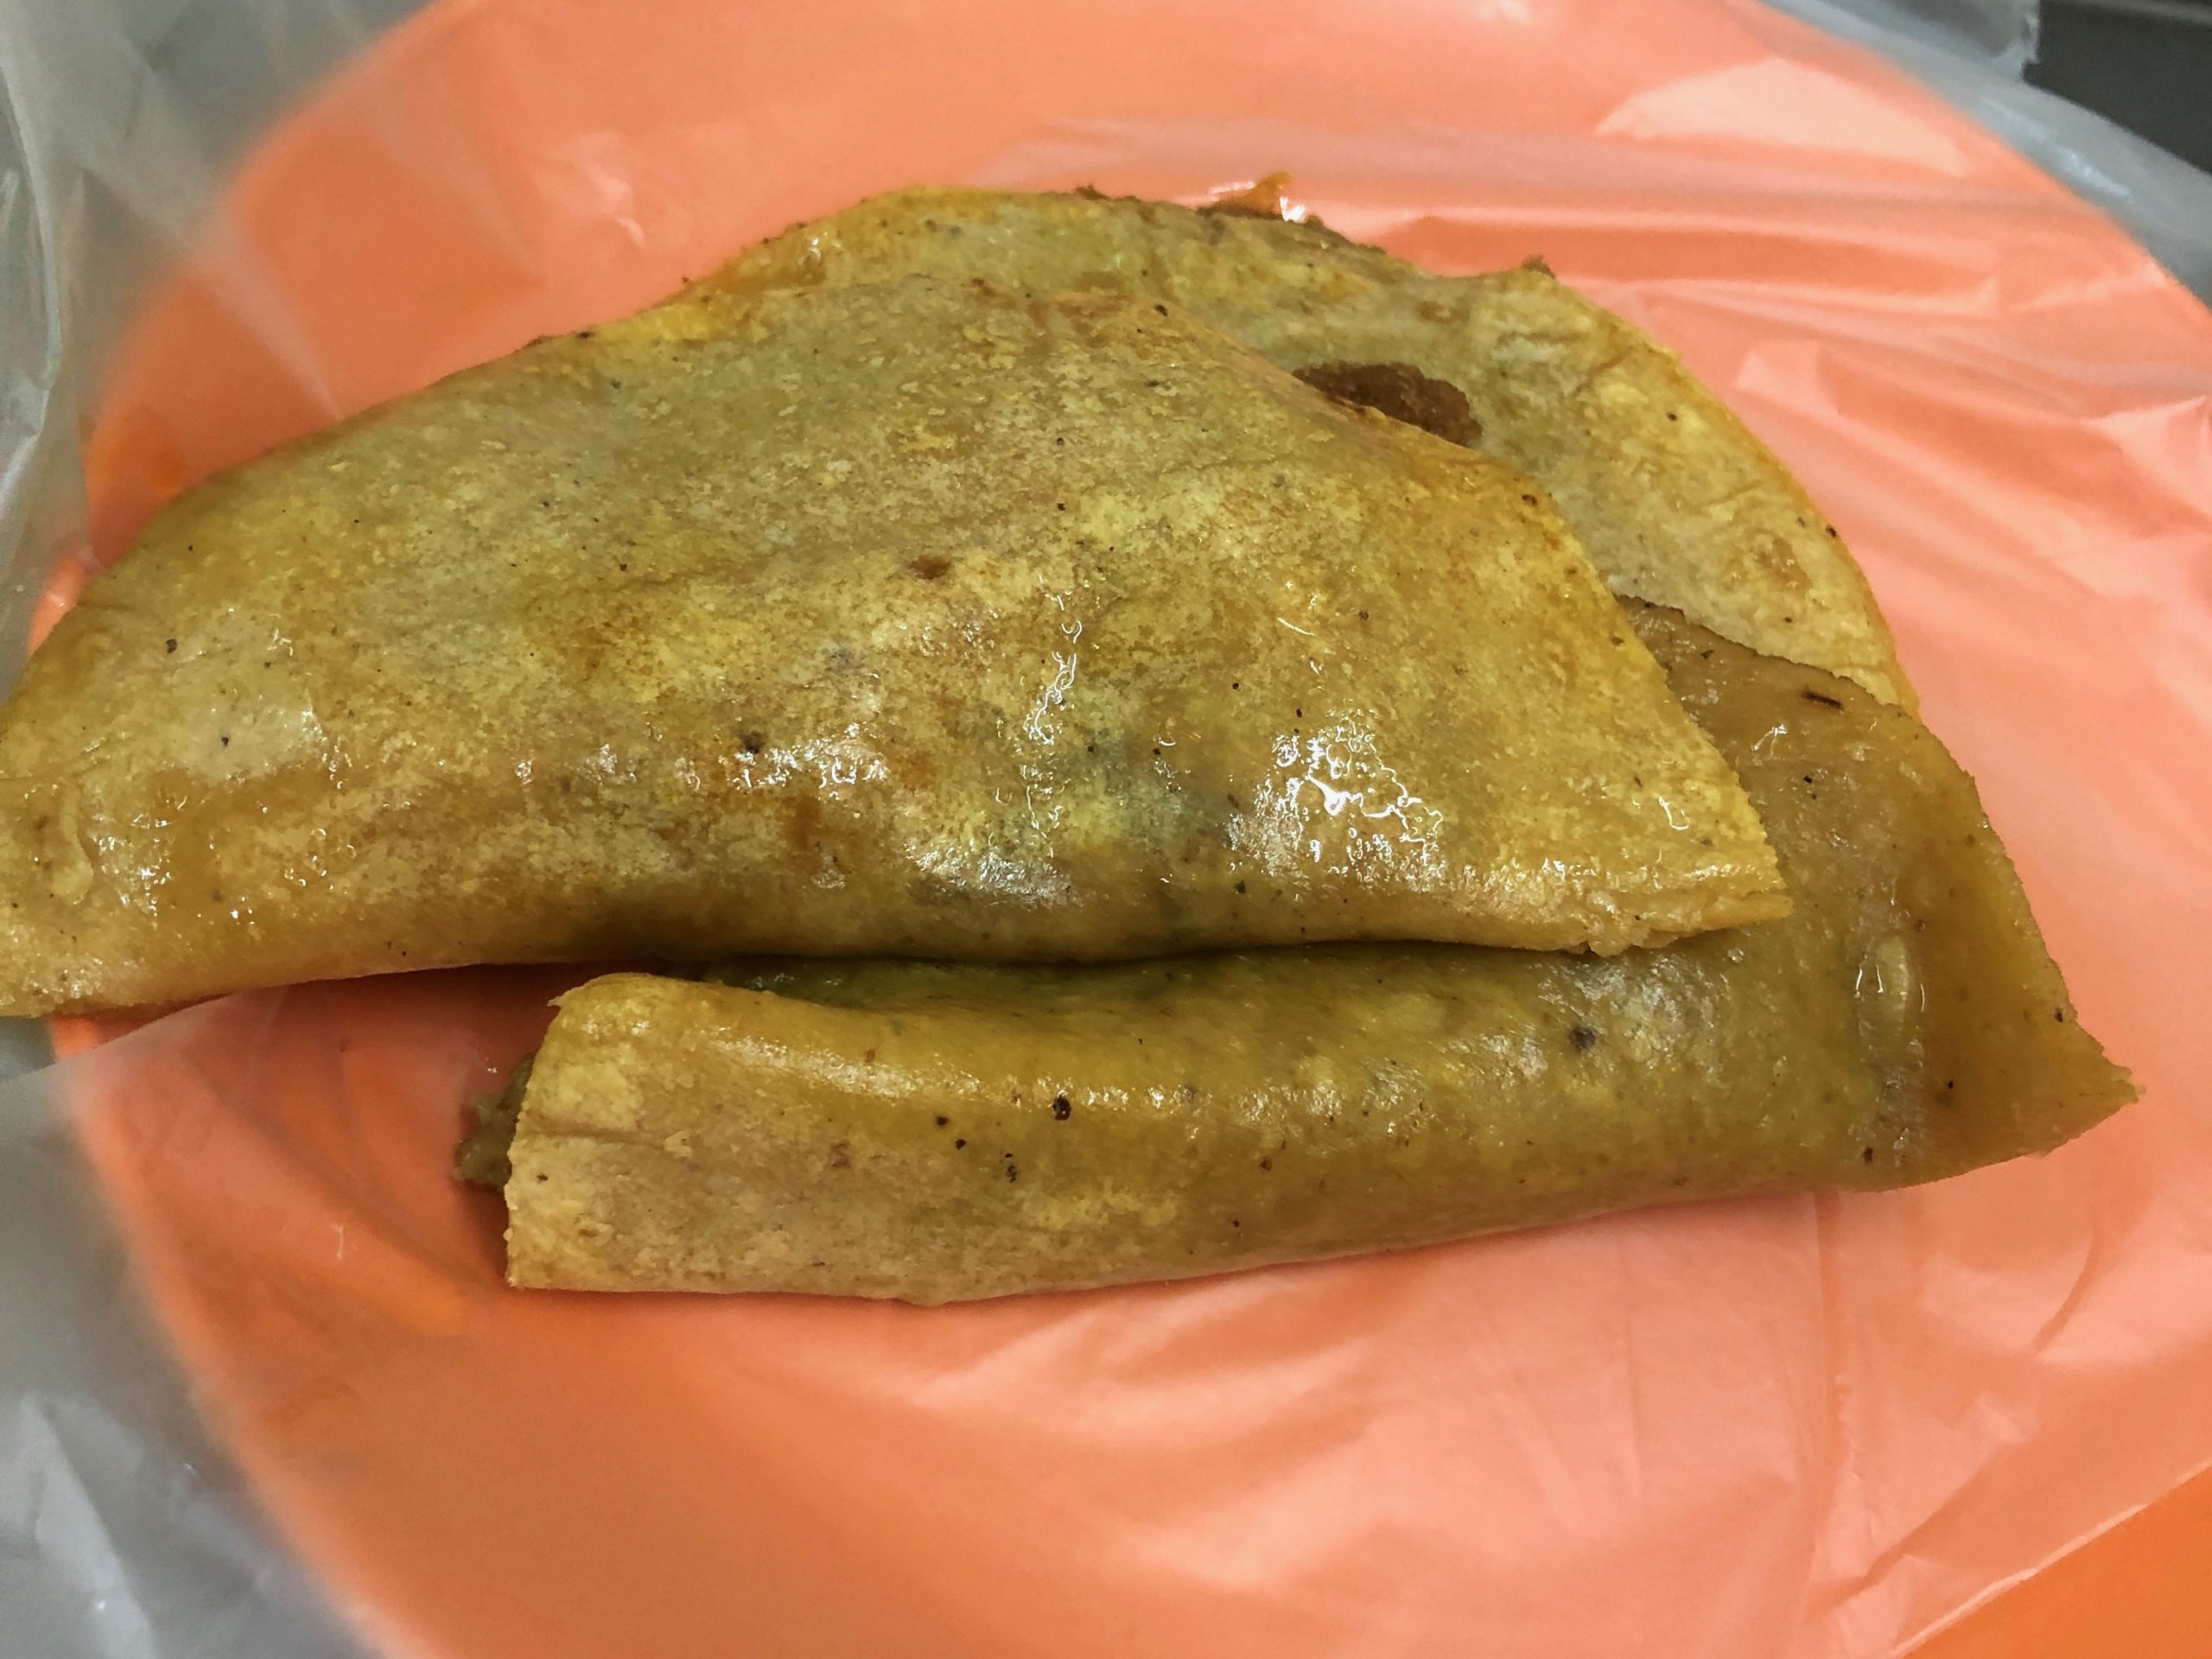 Three tacos de canasta on an orange plate